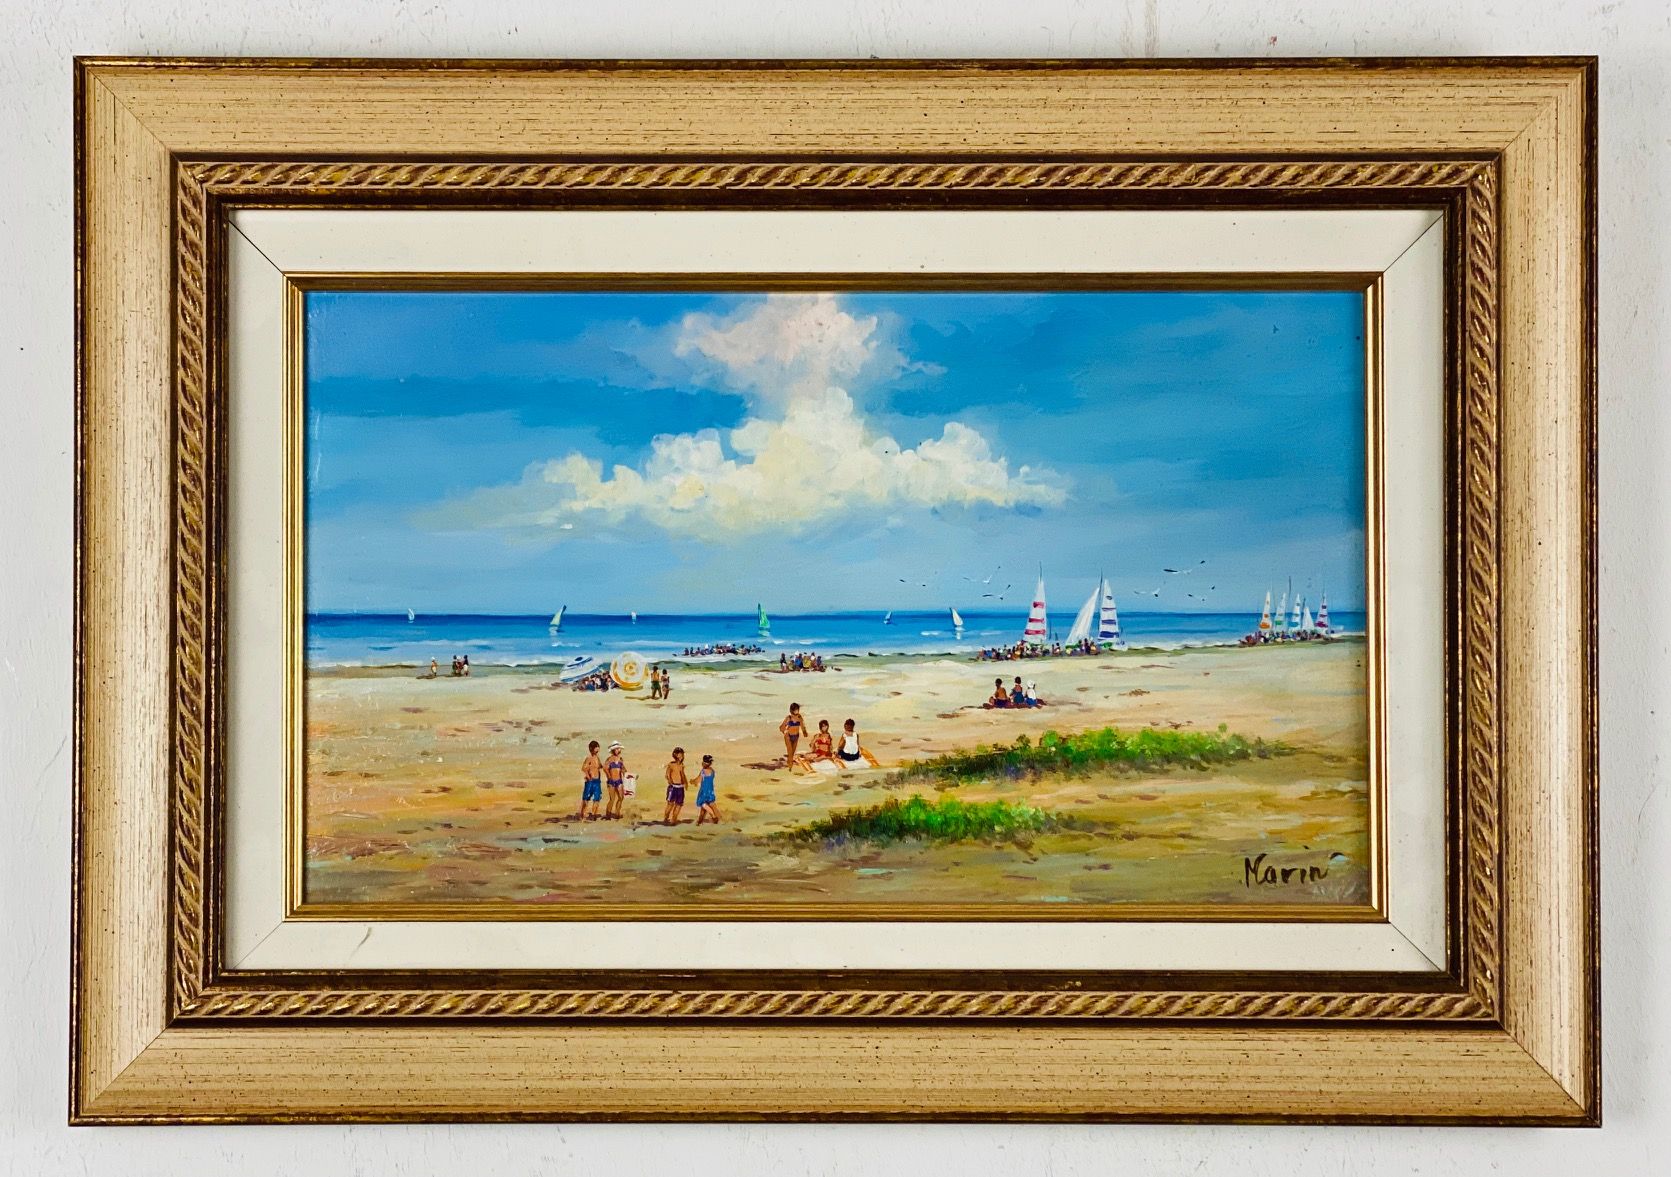 MARIN Gerald (1975-) 布面油画 "SUNDAY AT THE SEA"，右下角有签名，41 x 24 x 0cm。